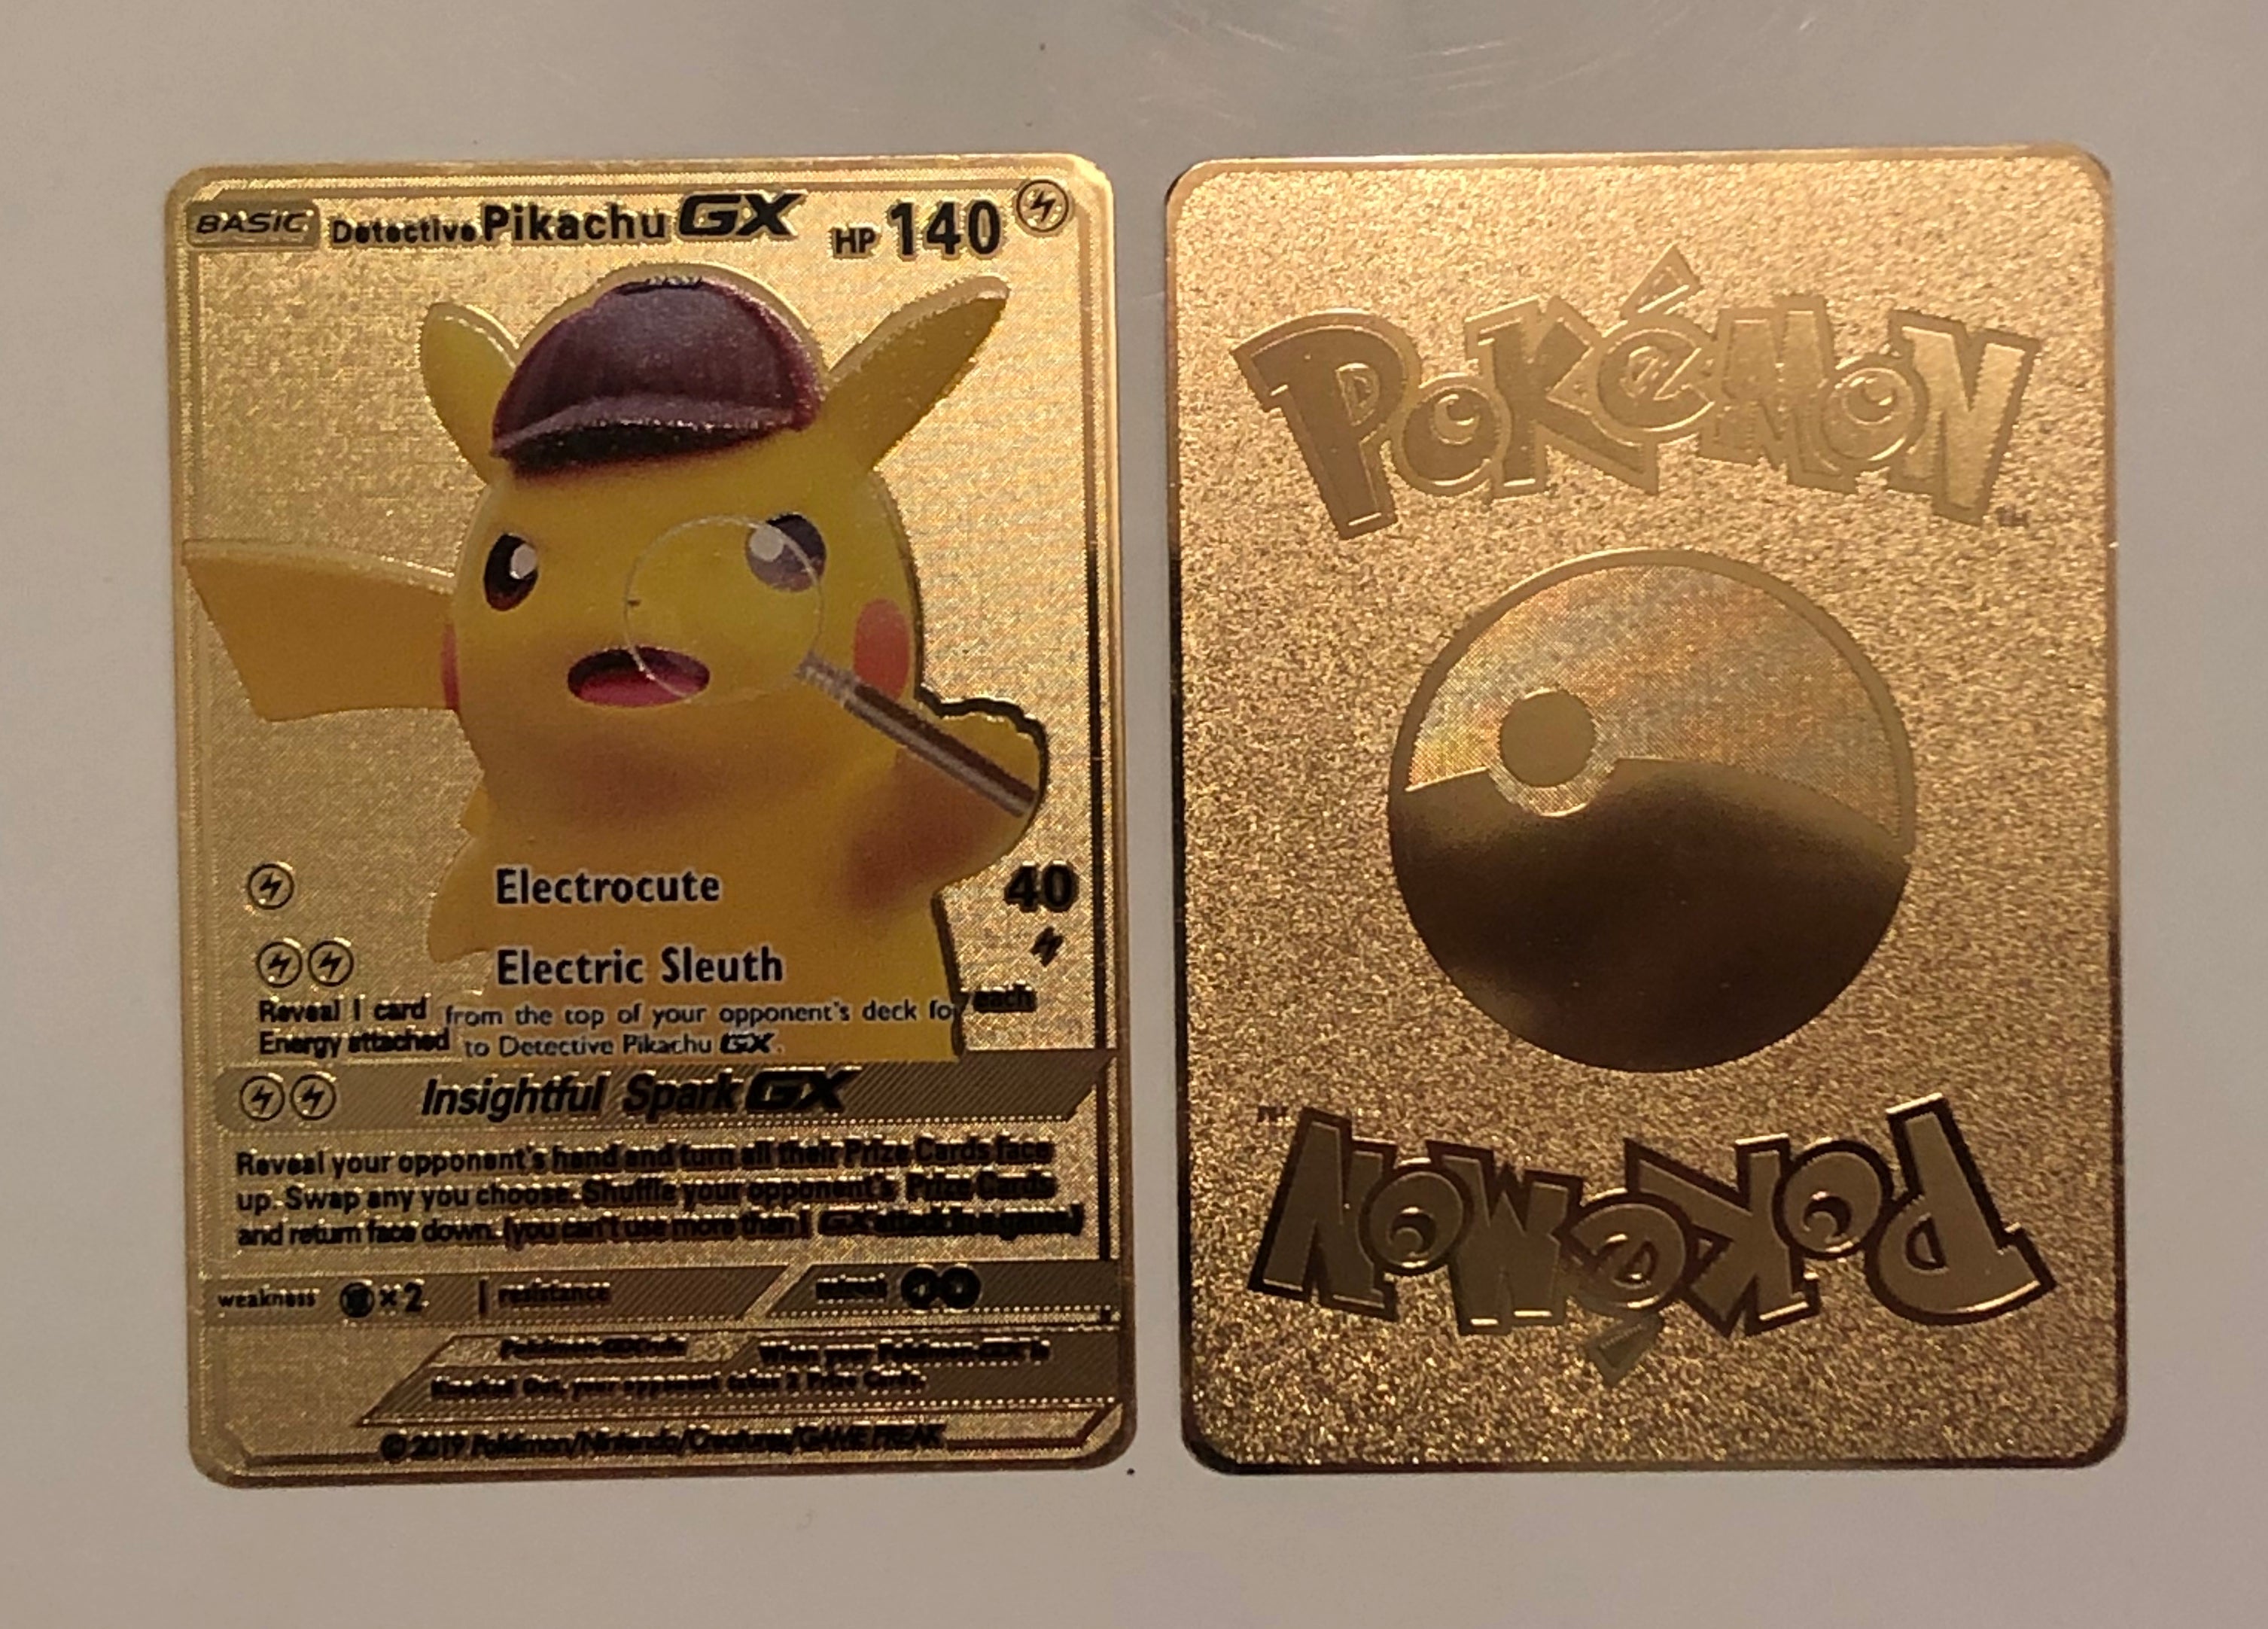 GOLD Detective Pikachu GX metal collector's Replica